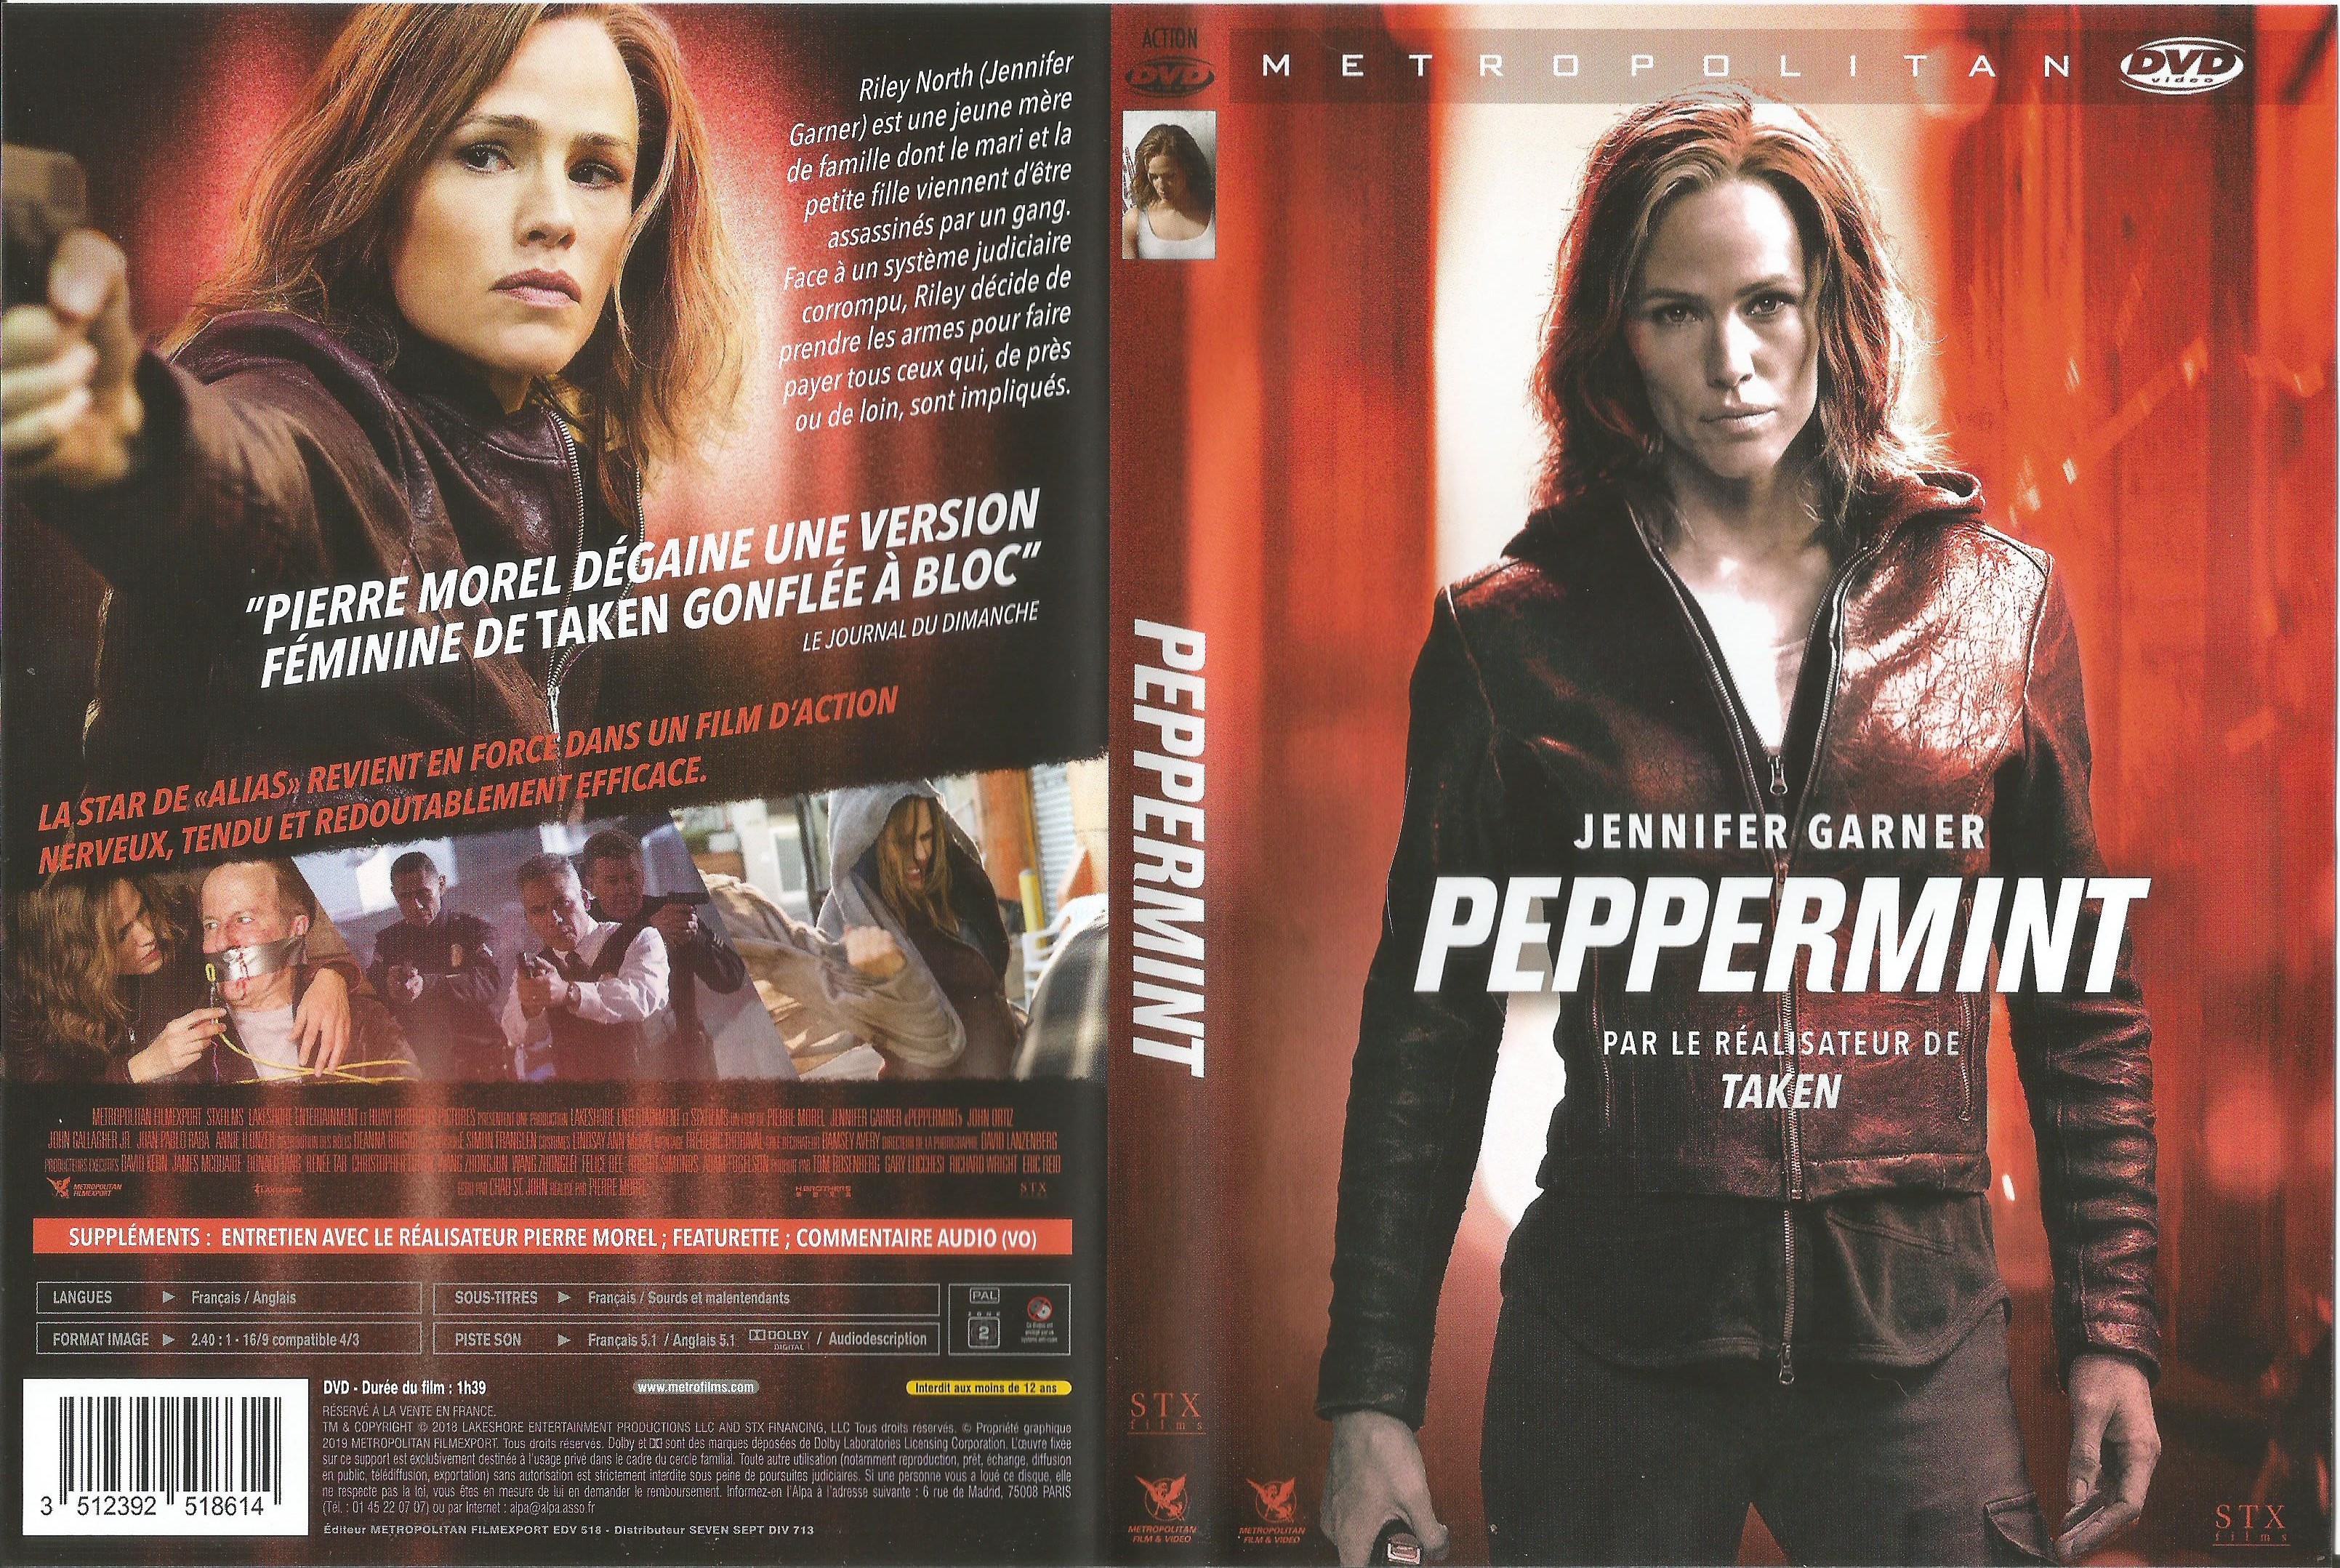 Jaquette DVD Peppermint